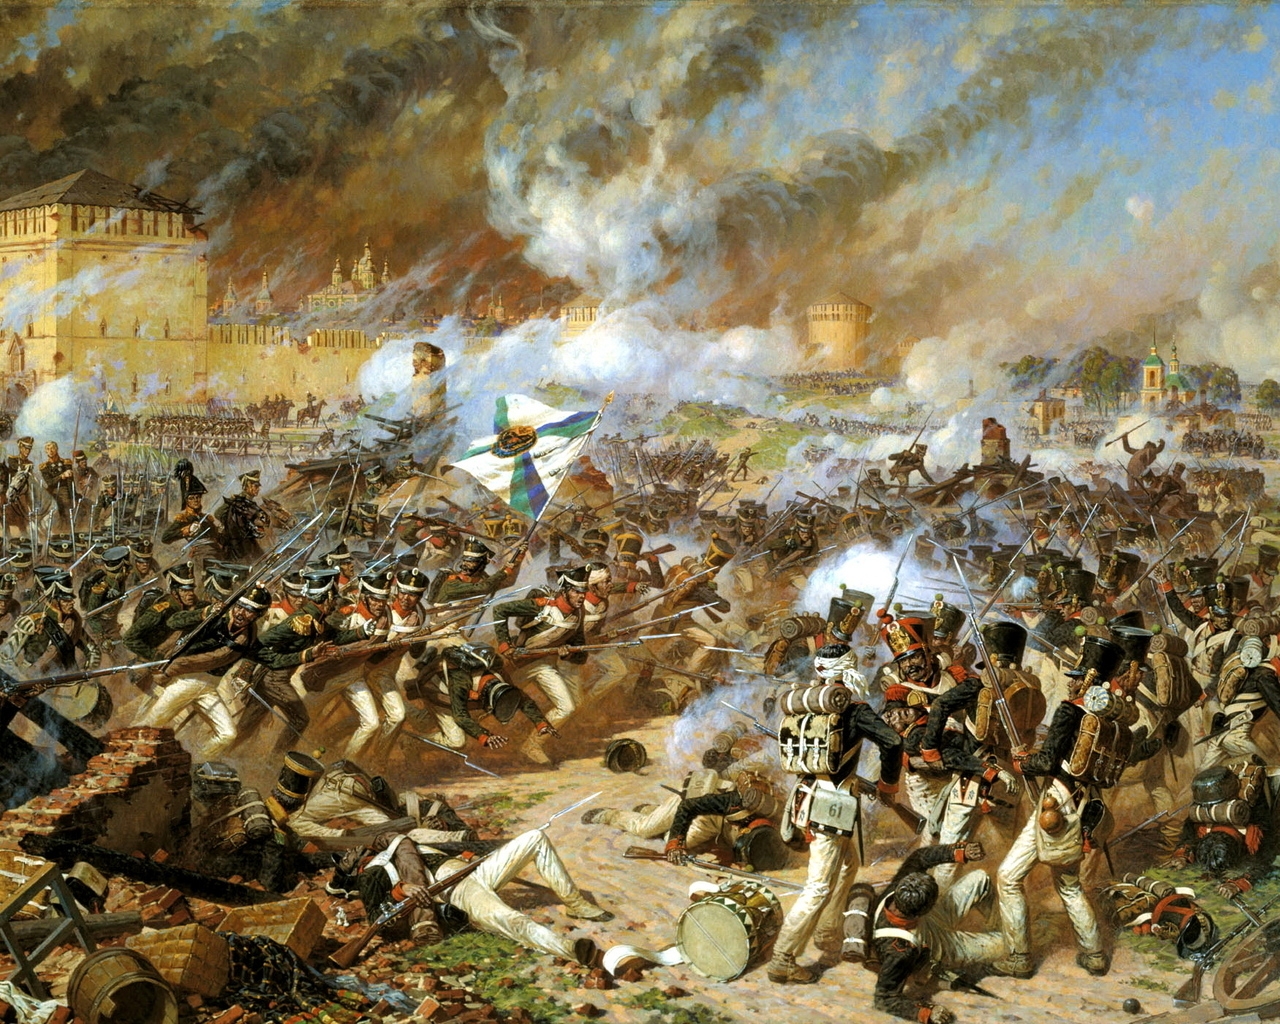 War Scene Paint for 1280 x 1024 resolution